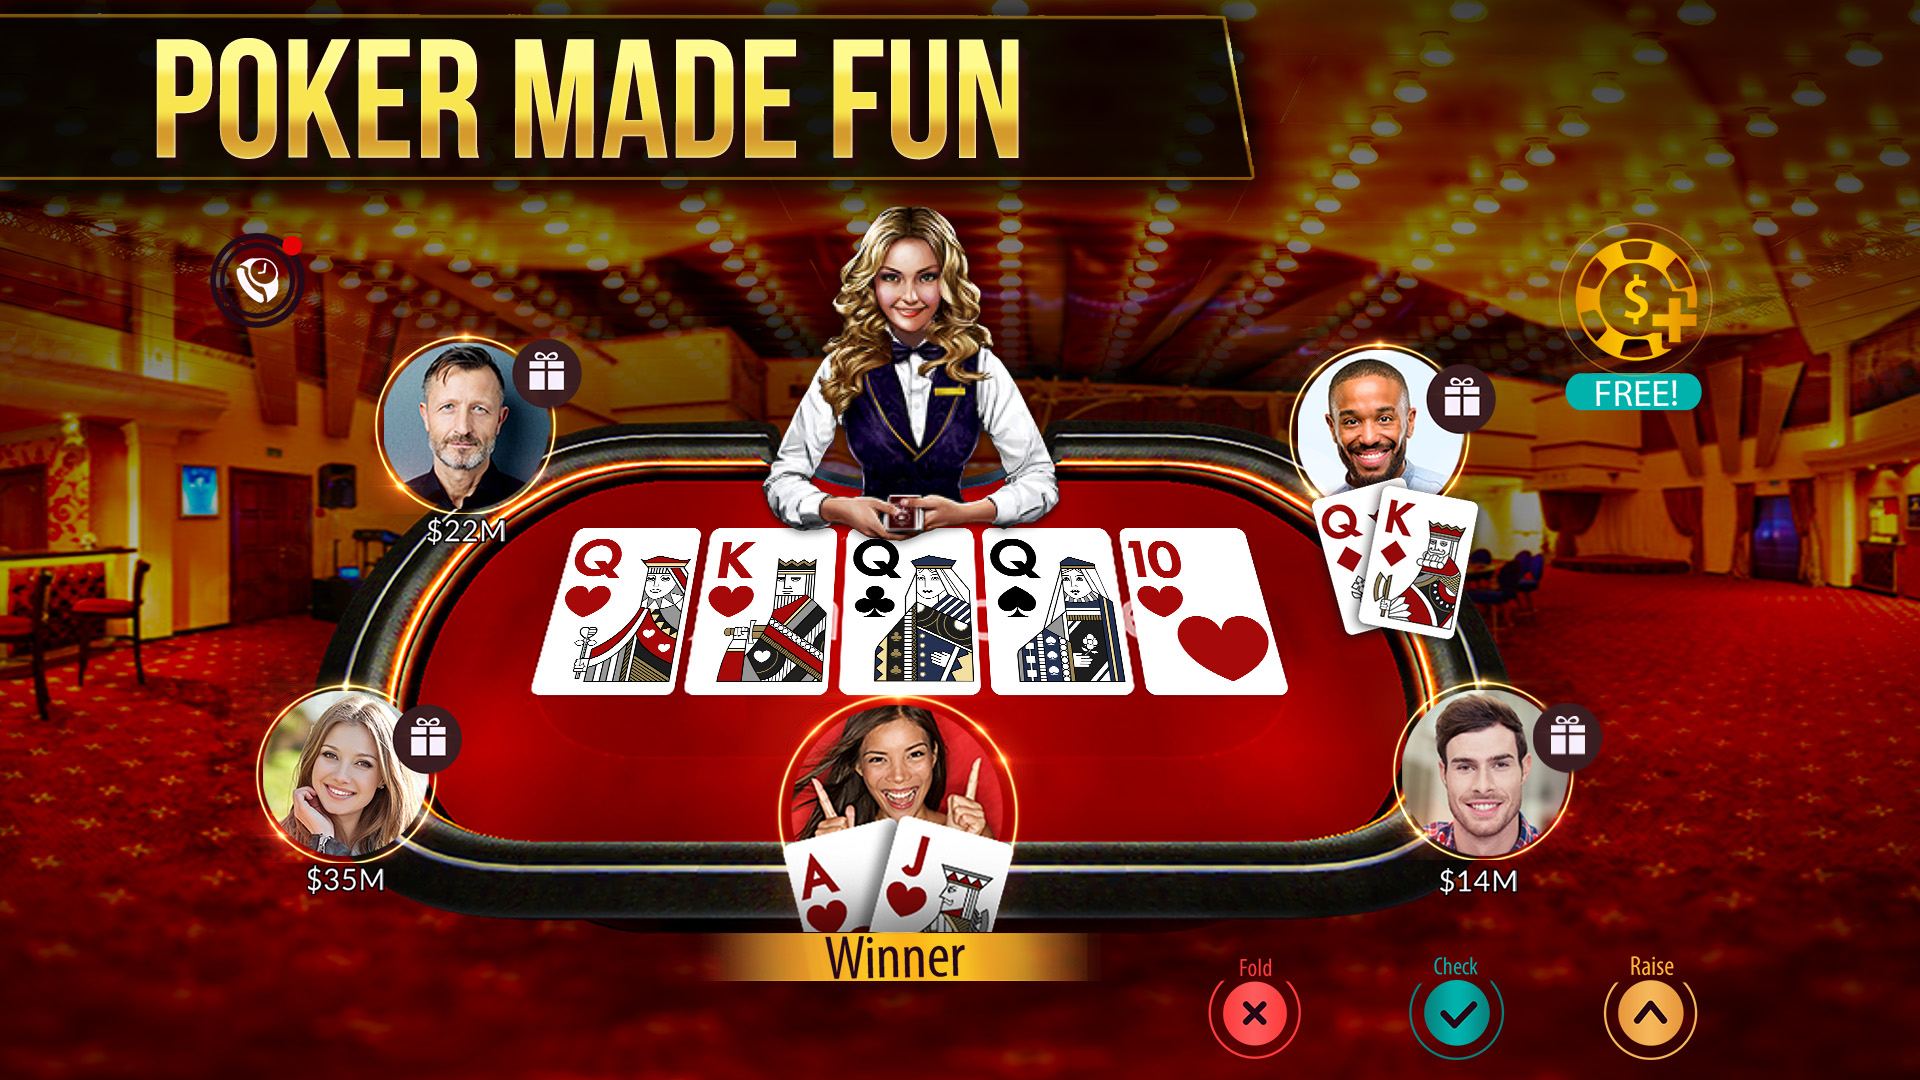 Zynga Poker- Texas Holdem Game Screenshot 13